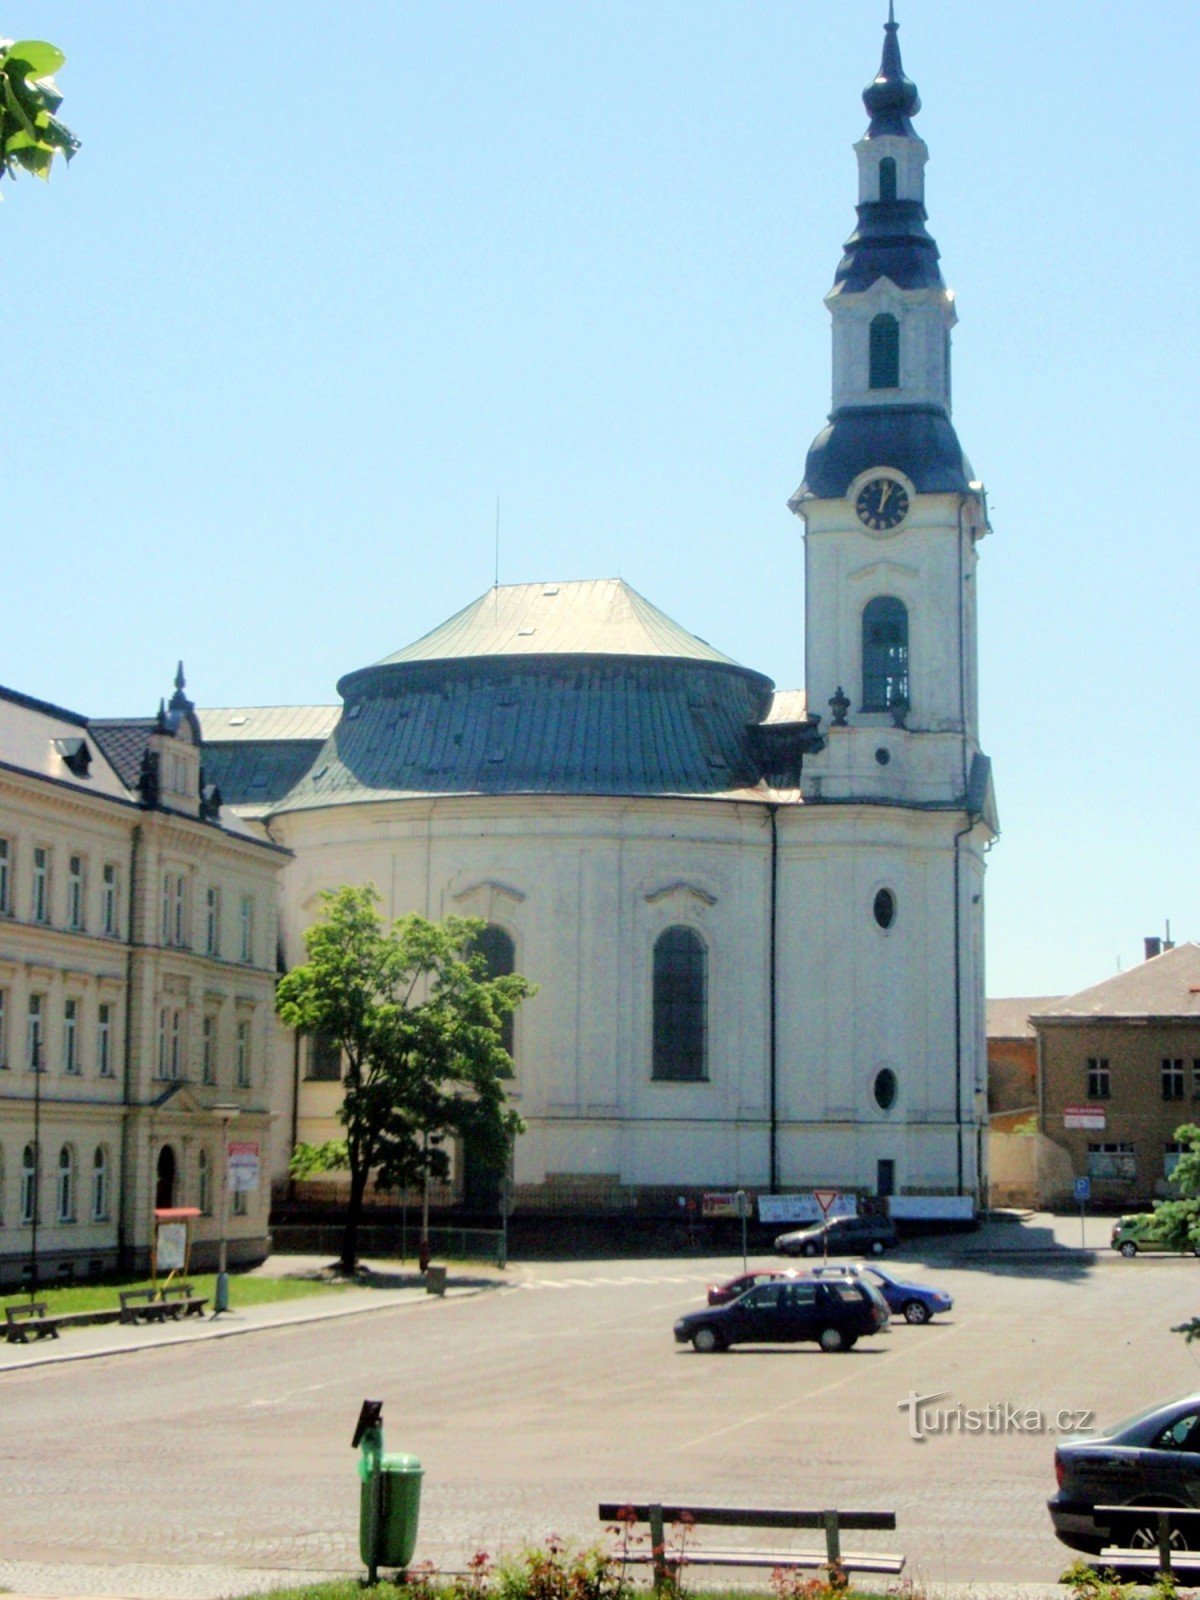 Nový Bor - Biserica Adormirea Maicii Domnului